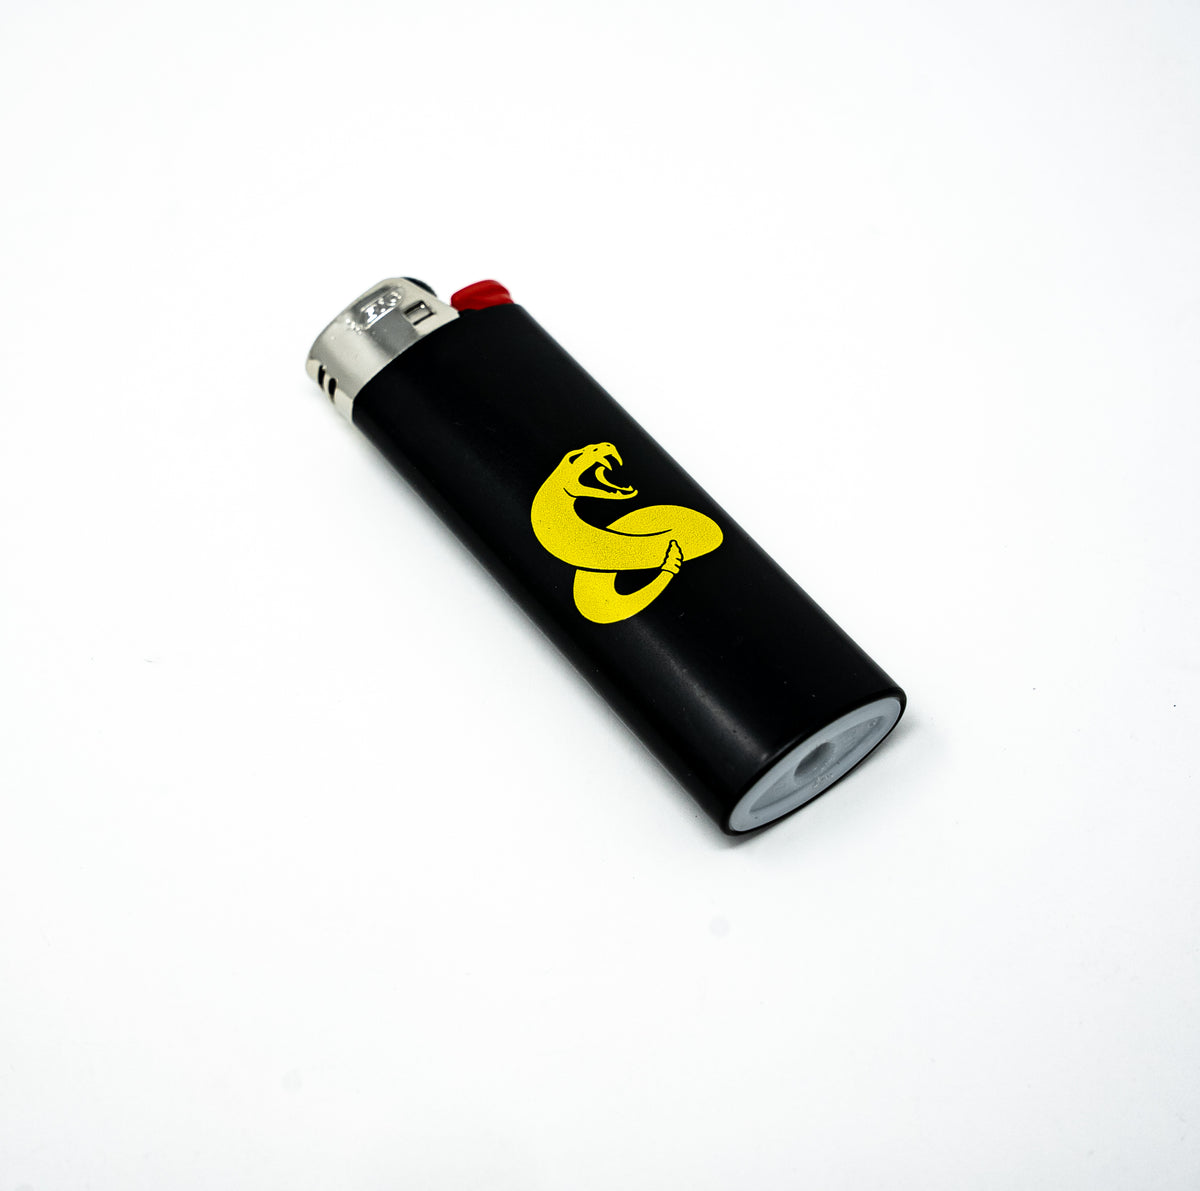 Genuine BIC lighter